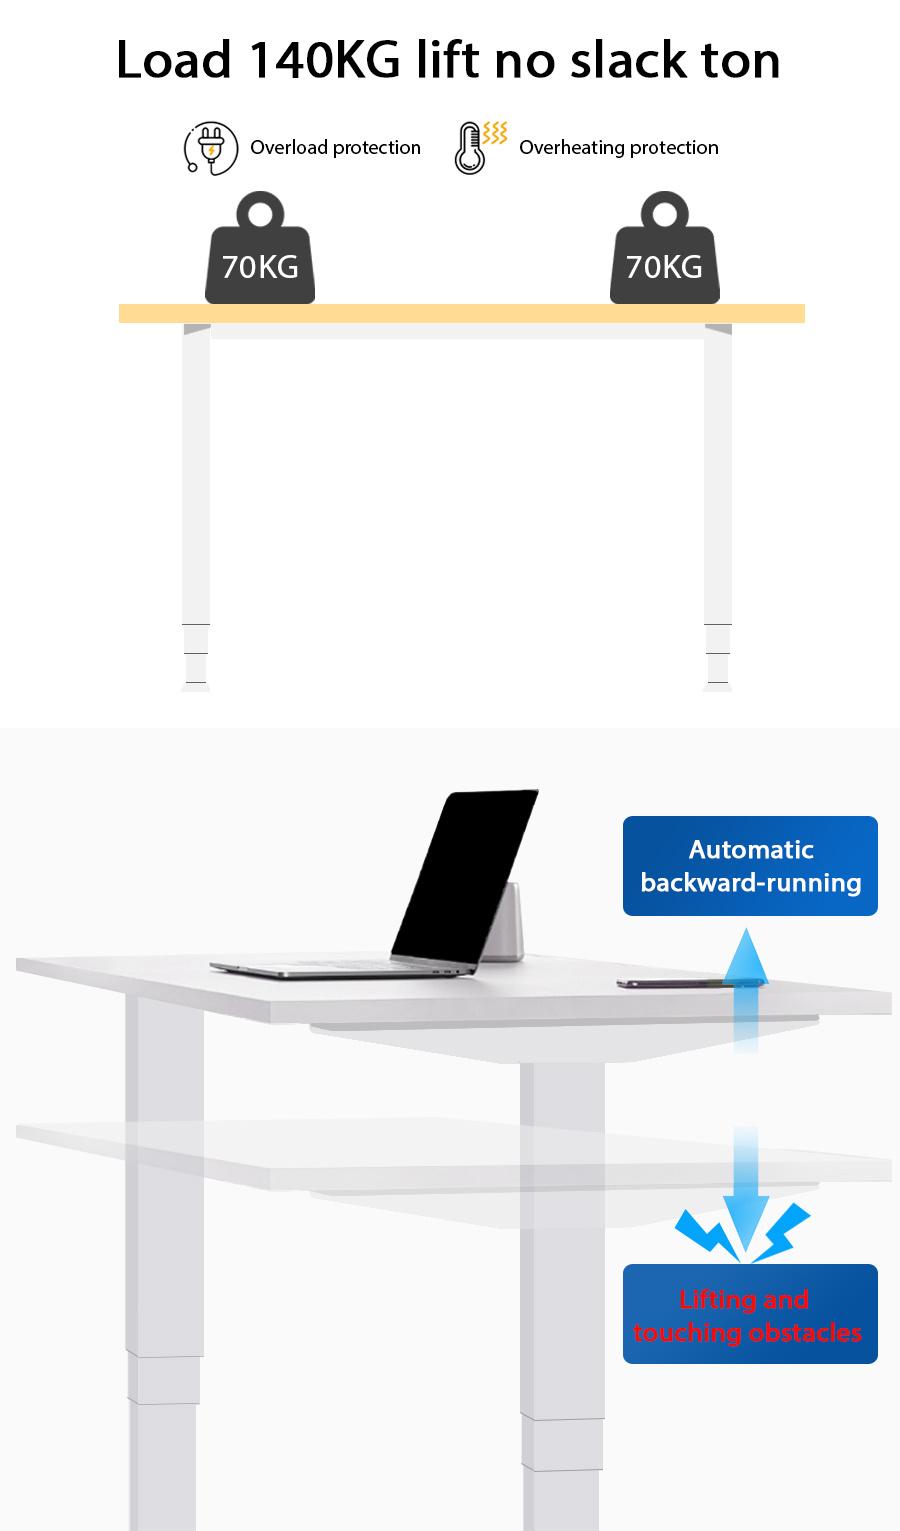 Certificated Sit Standing Height Adjustable Office Desk for EU Market